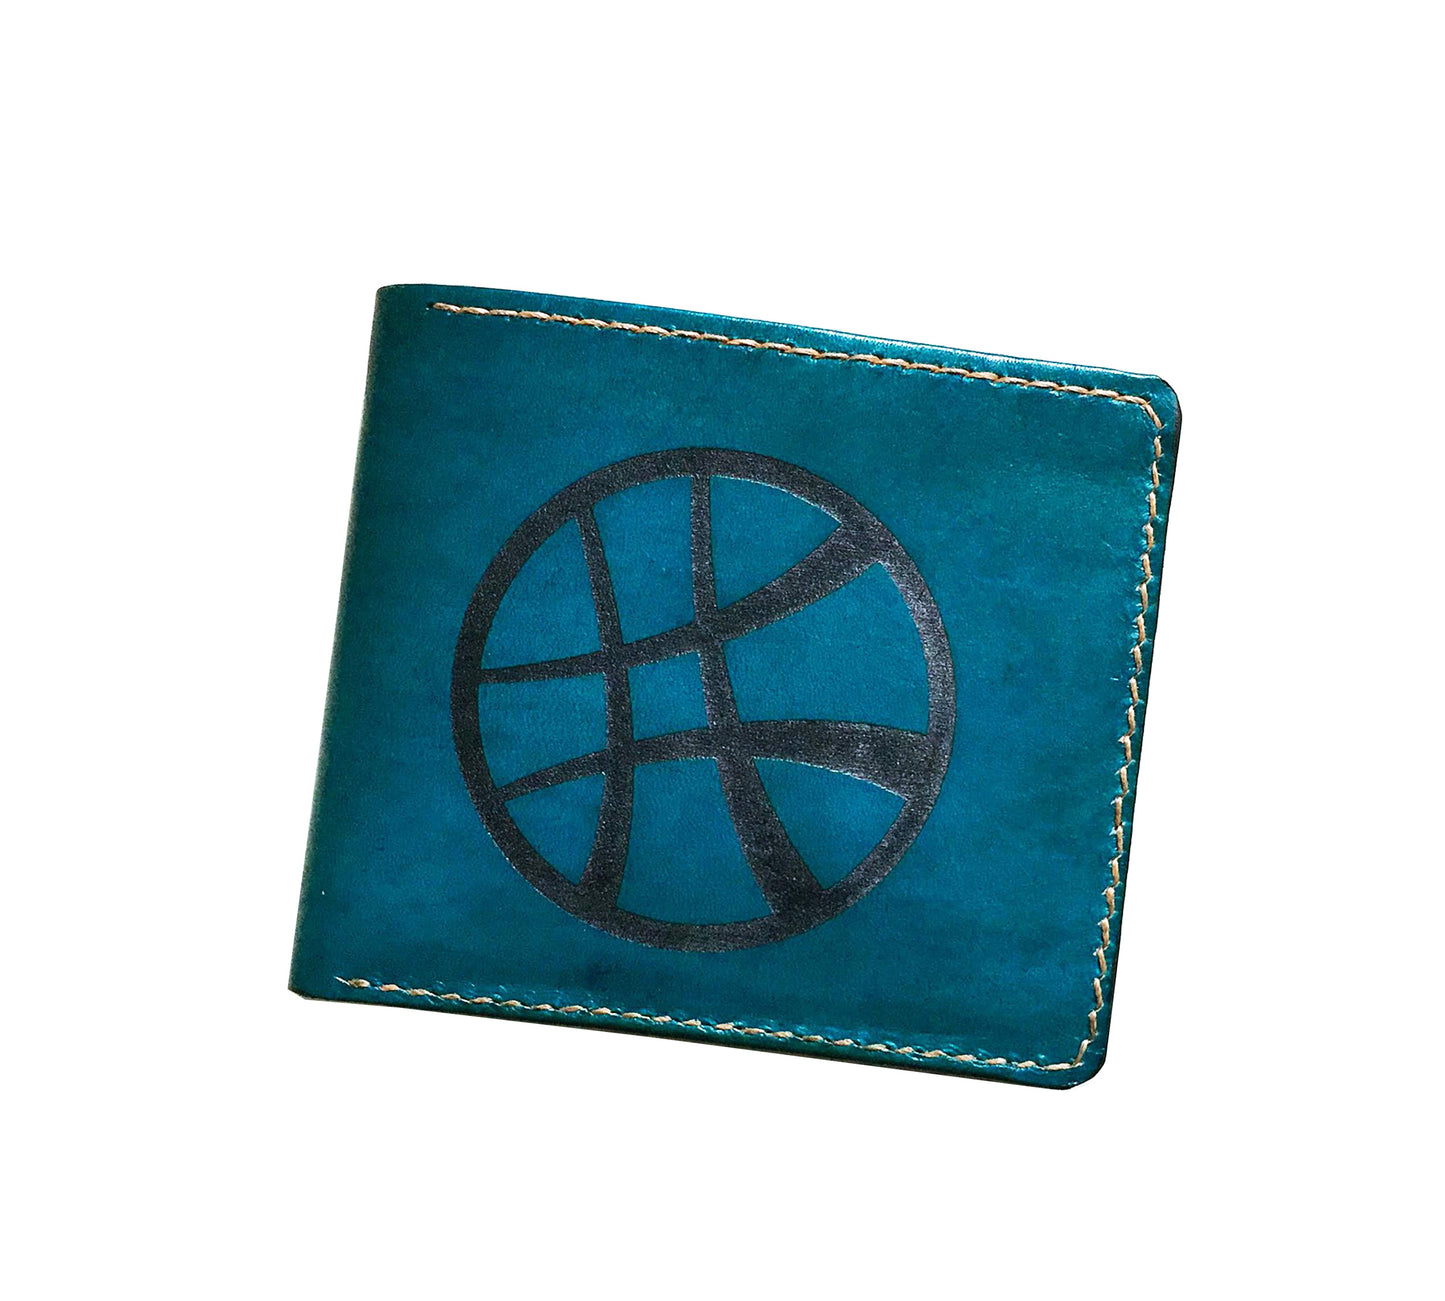 Mayan Corner - Superheroes leather handmade wallet, customized men's wallet, Leather gift ideas for men - Winter Soldier Star logo wallet